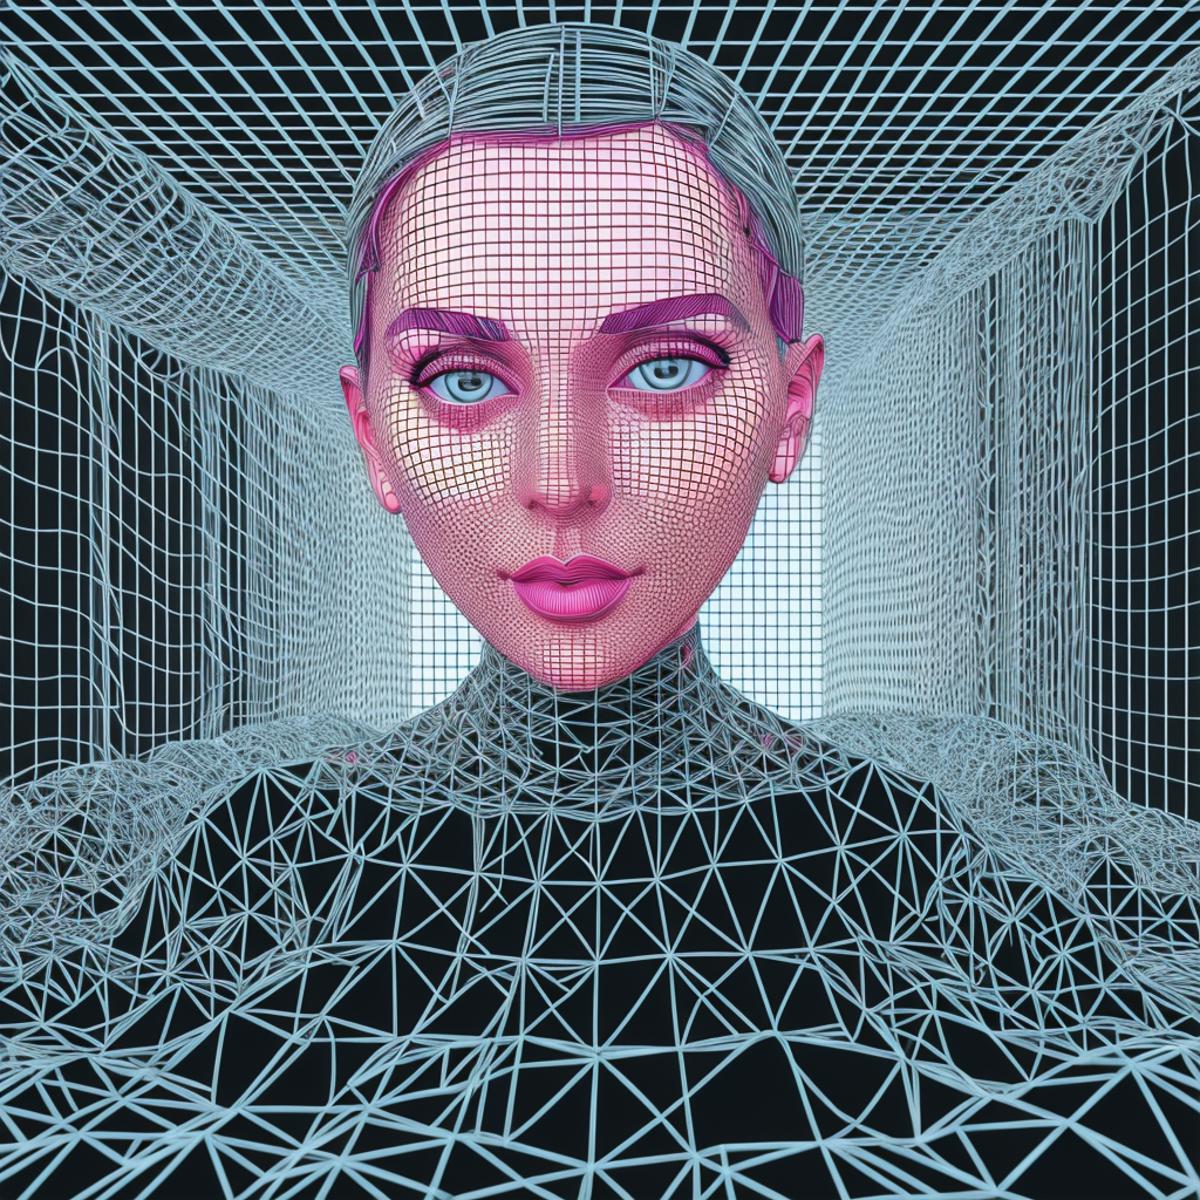 AI model image by secretinthebox